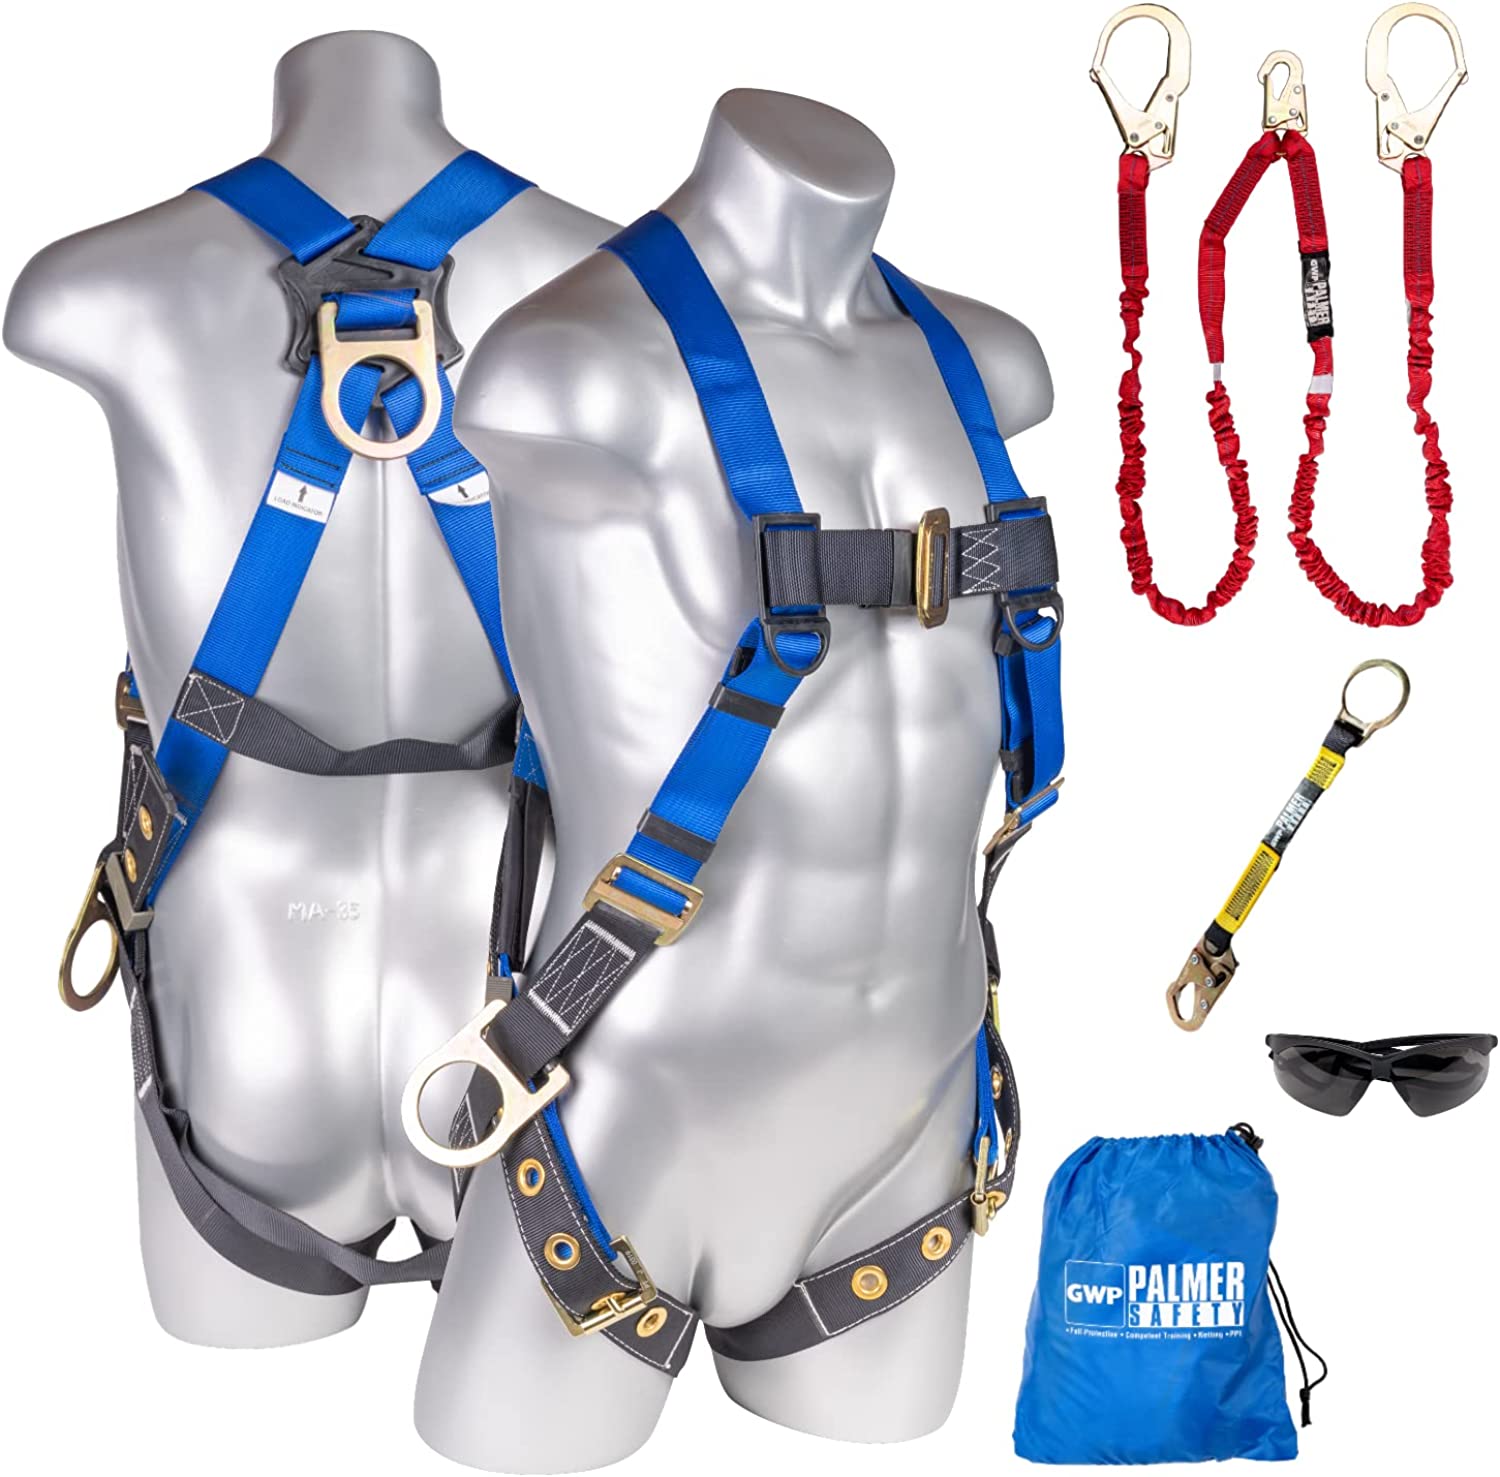 Palmer Safety Safety Harness Kit I 5pt Body Harness, 6' Double Lanyard, 18